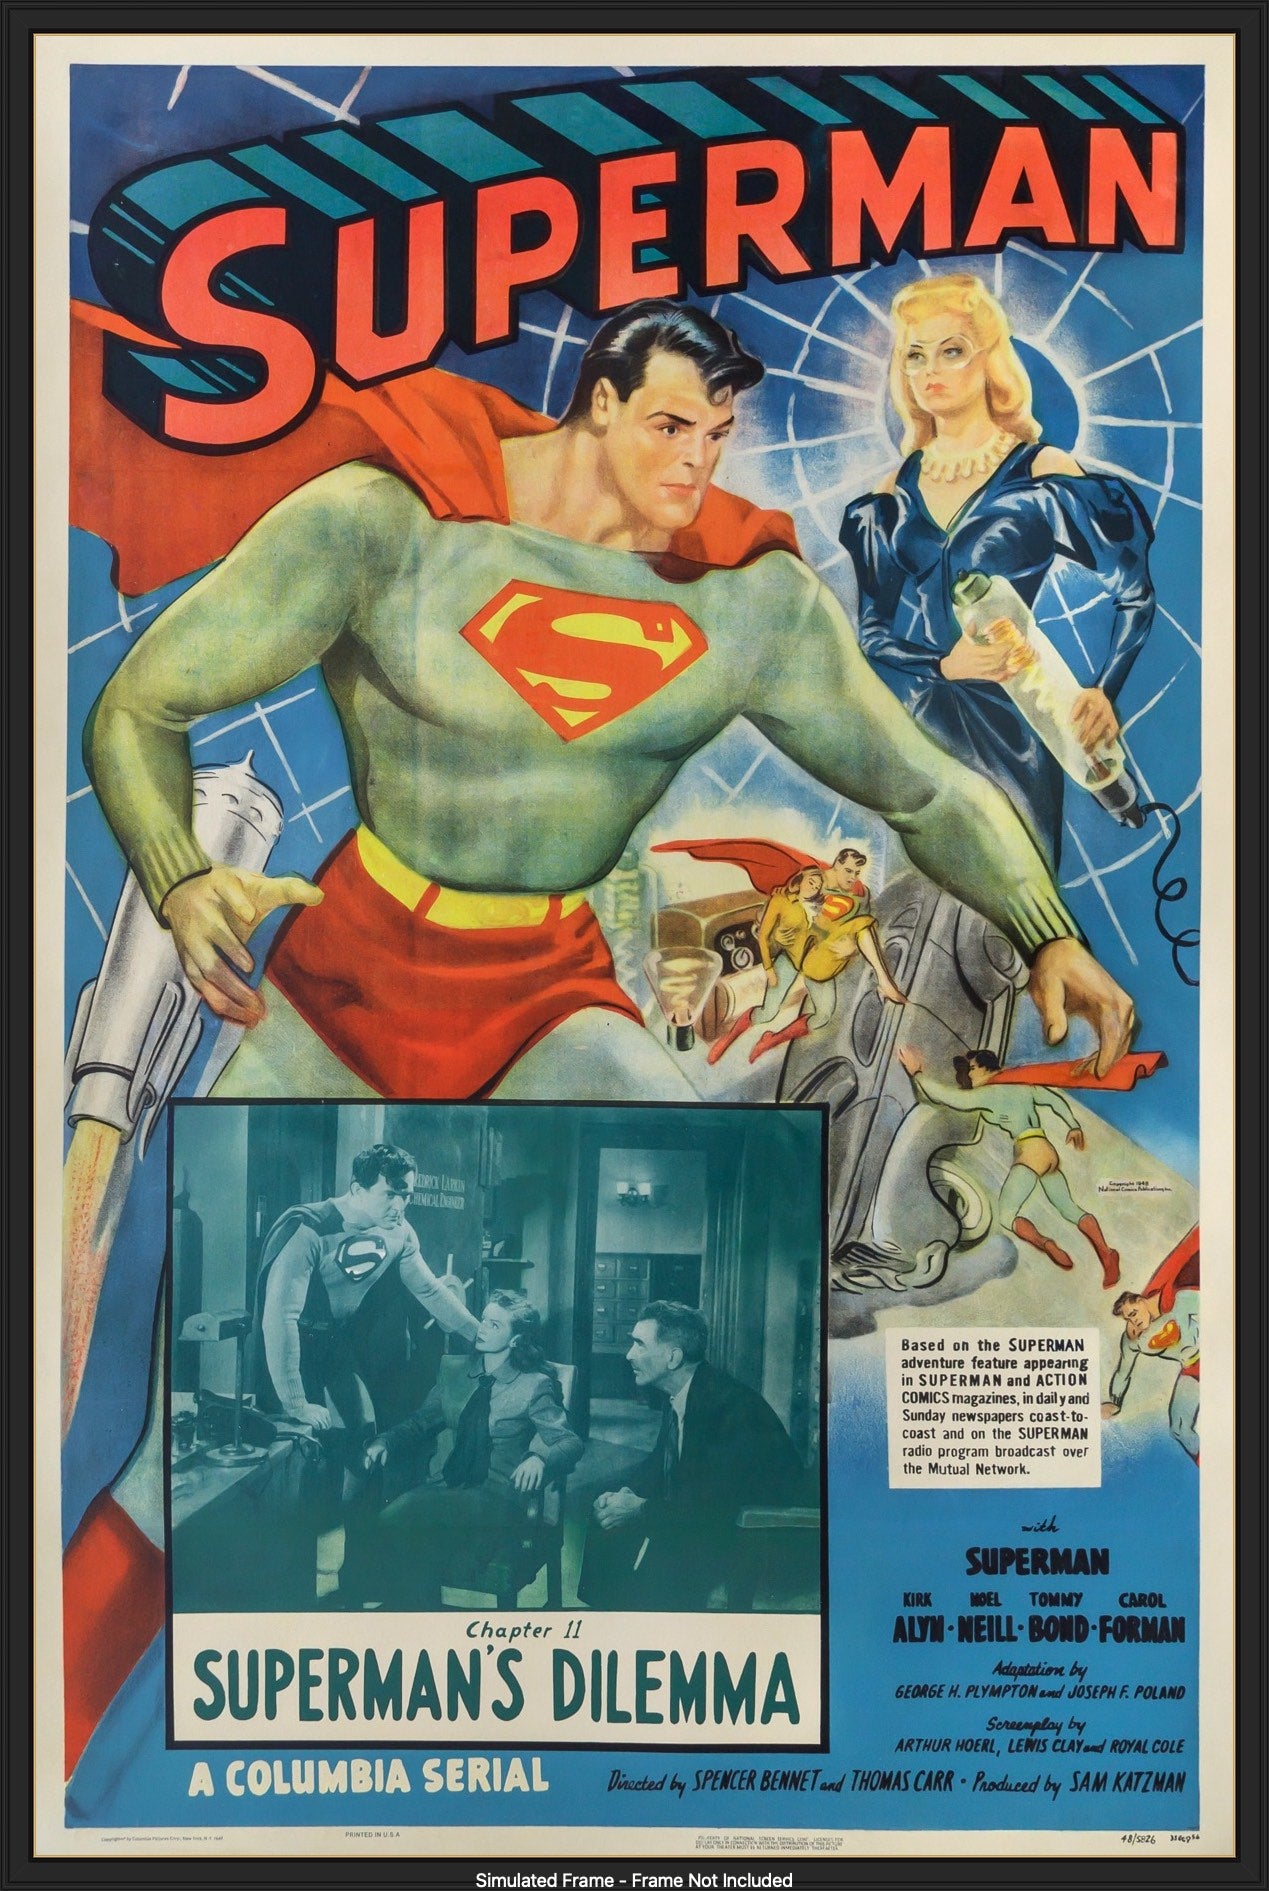 Superman (1948) original movie poster for sale at Original Film Art